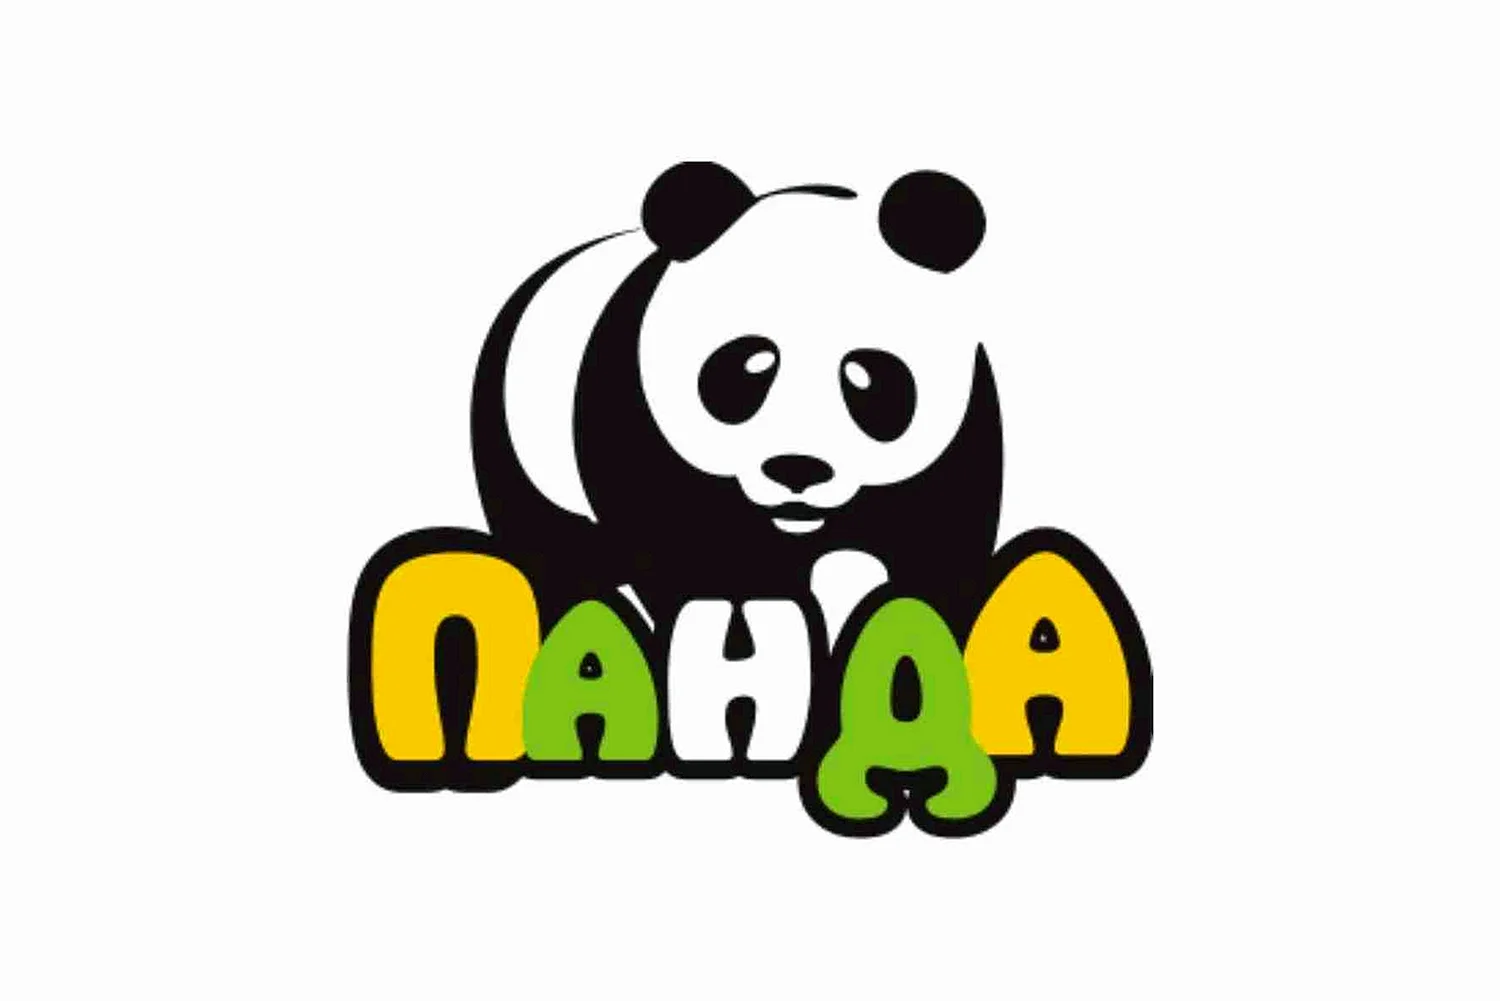 Панда эмблема